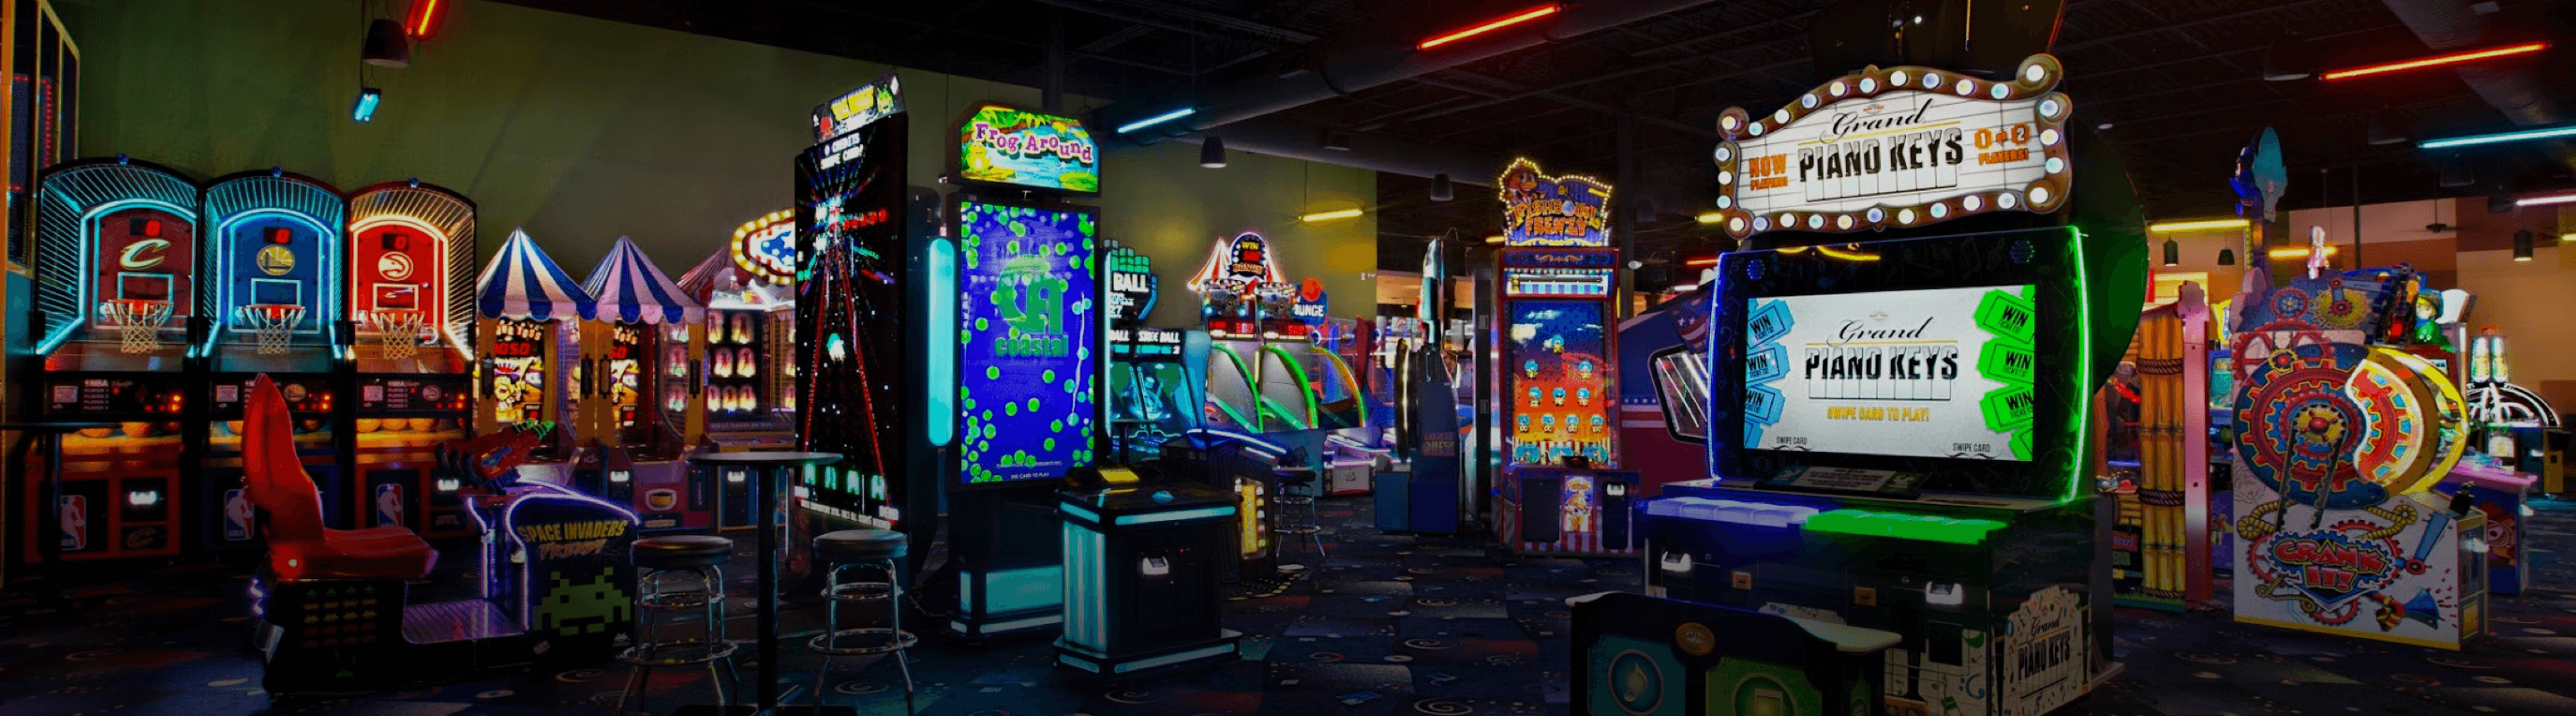 Best Arcade Games Near Me | Book an Arcade Birthday Party | Arcade Places